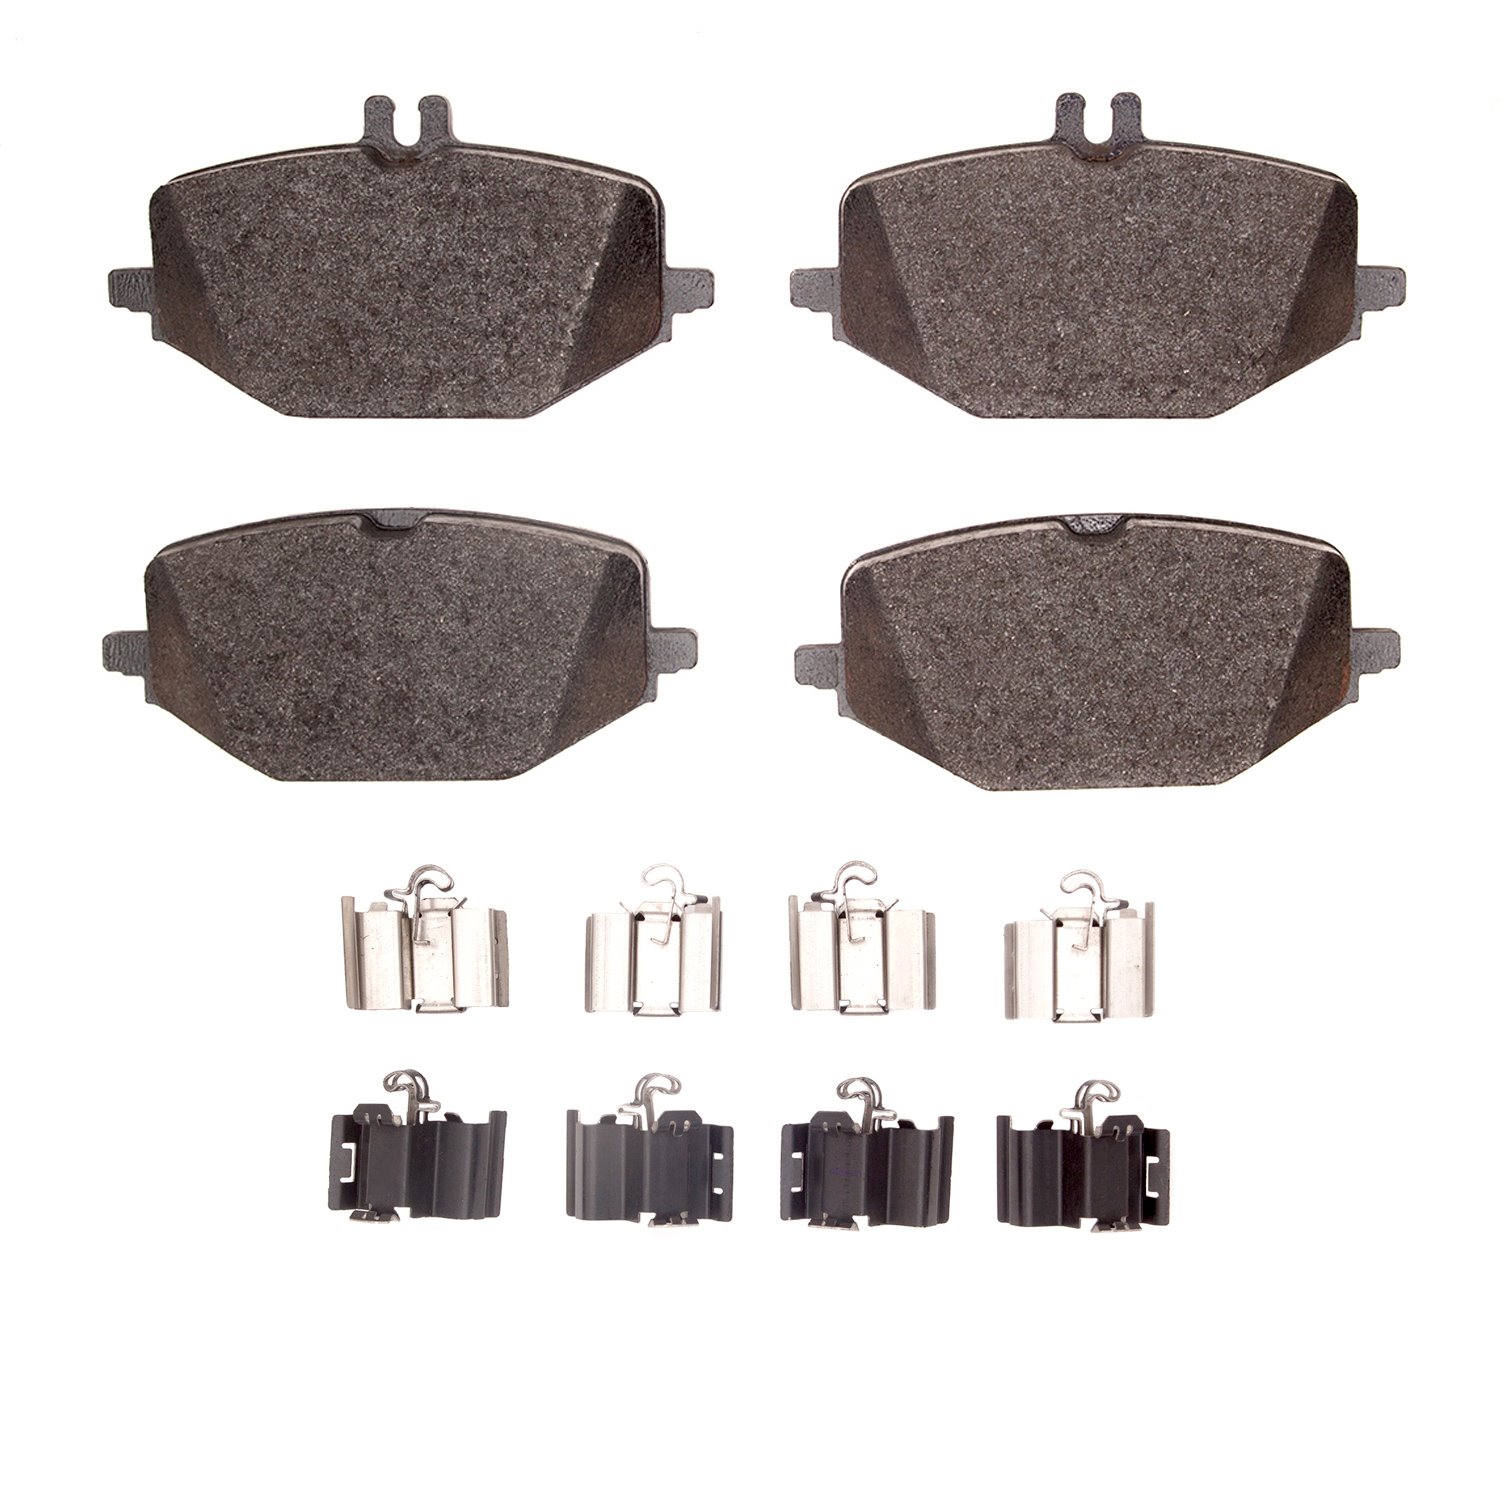 1600-2210-01 5000 Euro Ceramic Brake Pads & Hardware Kit, Fits Select Mercedes-Benz, Position: Rear